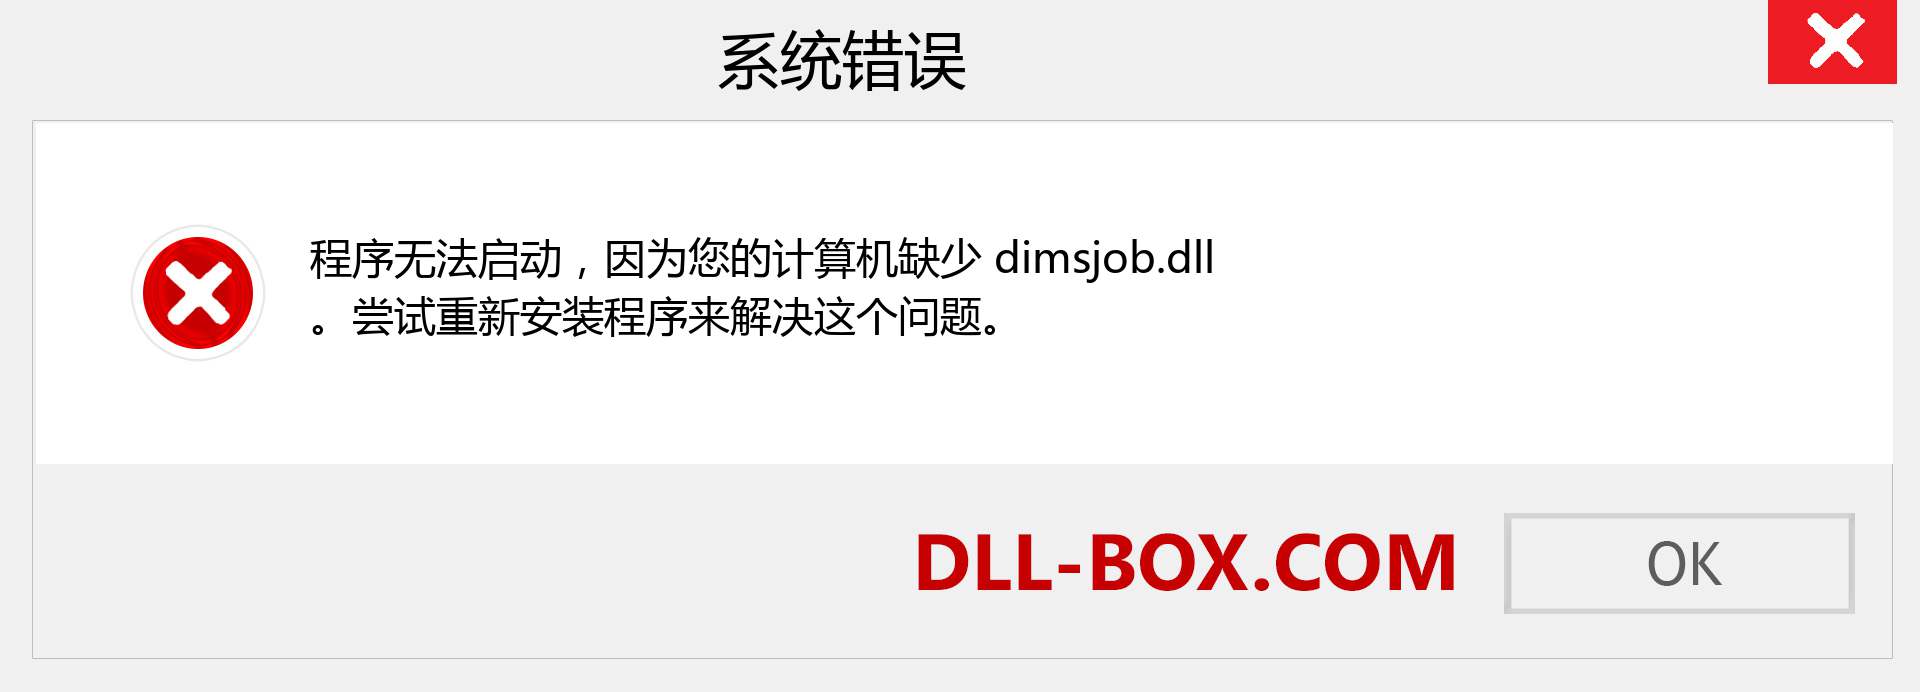 dimsjob.dll 文件丢失？。 适用于 Windows 7、8、10 的下载 - 修复 Windows、照片、图像上的 dimsjob dll 丢失错误